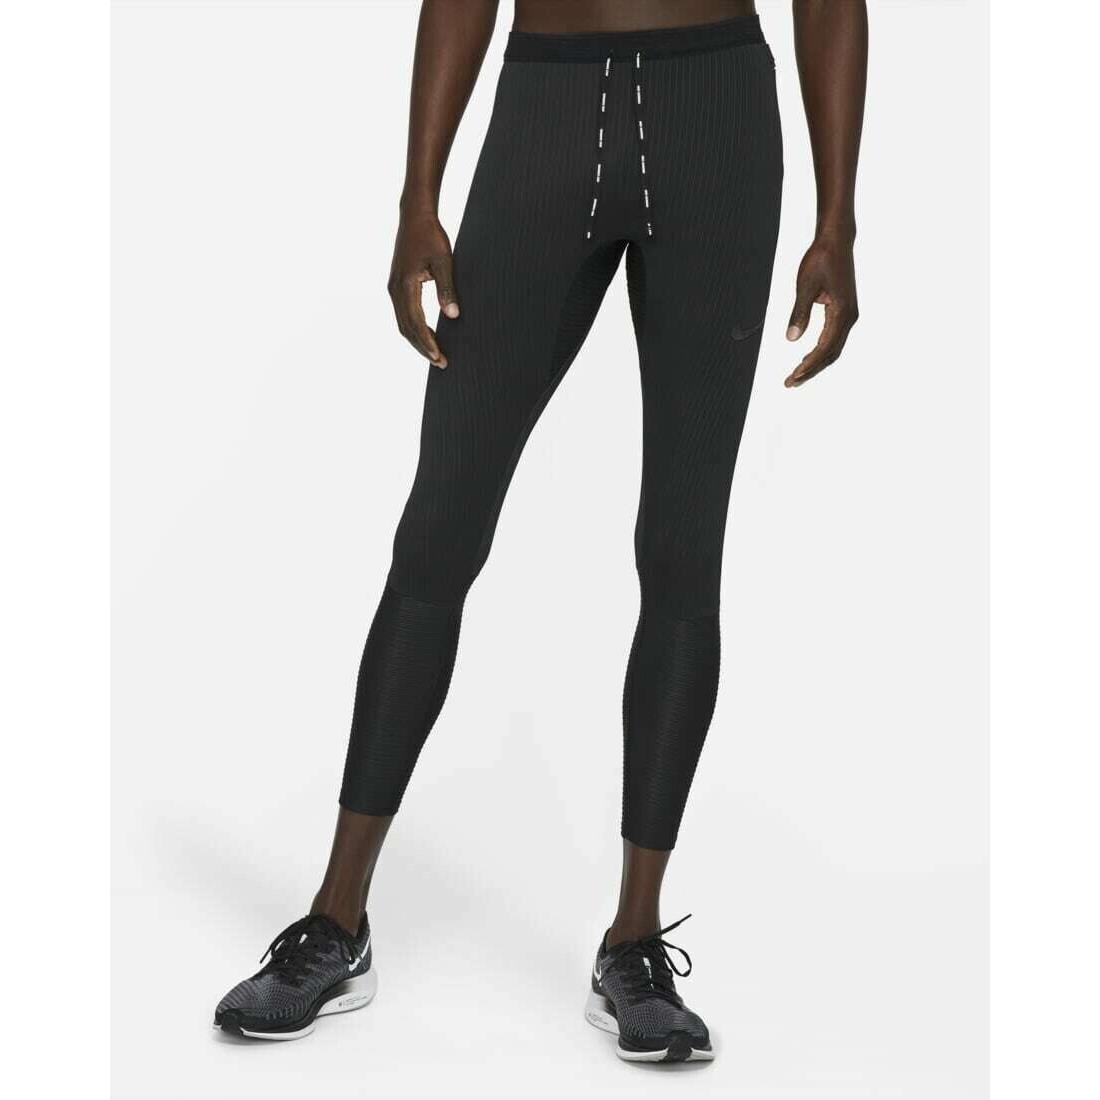 Nike Dri-fit Swift Running Tights Full Length Run Pants Black Small